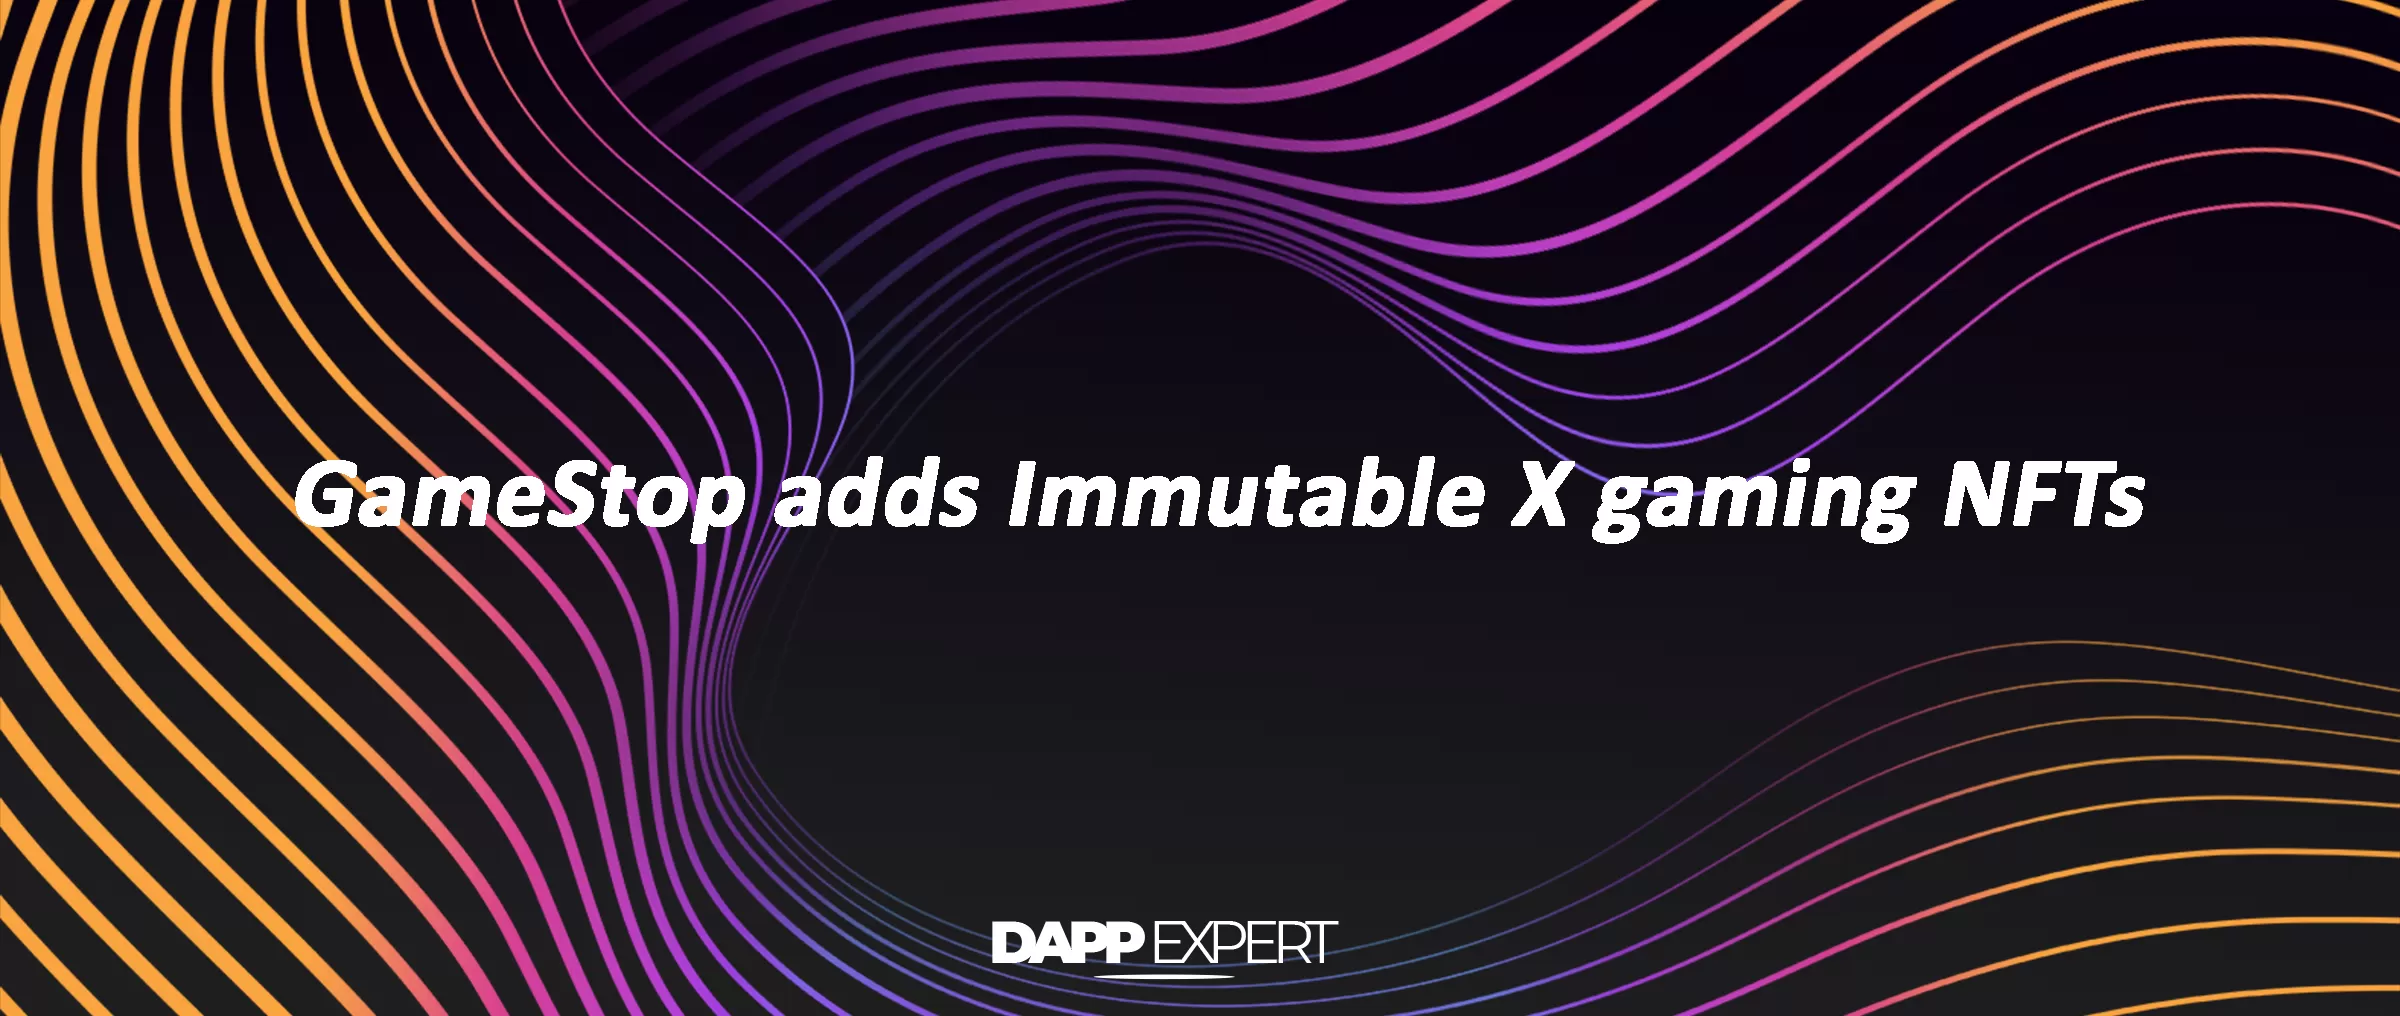 GameStop adds Immutable X gaming NFTs